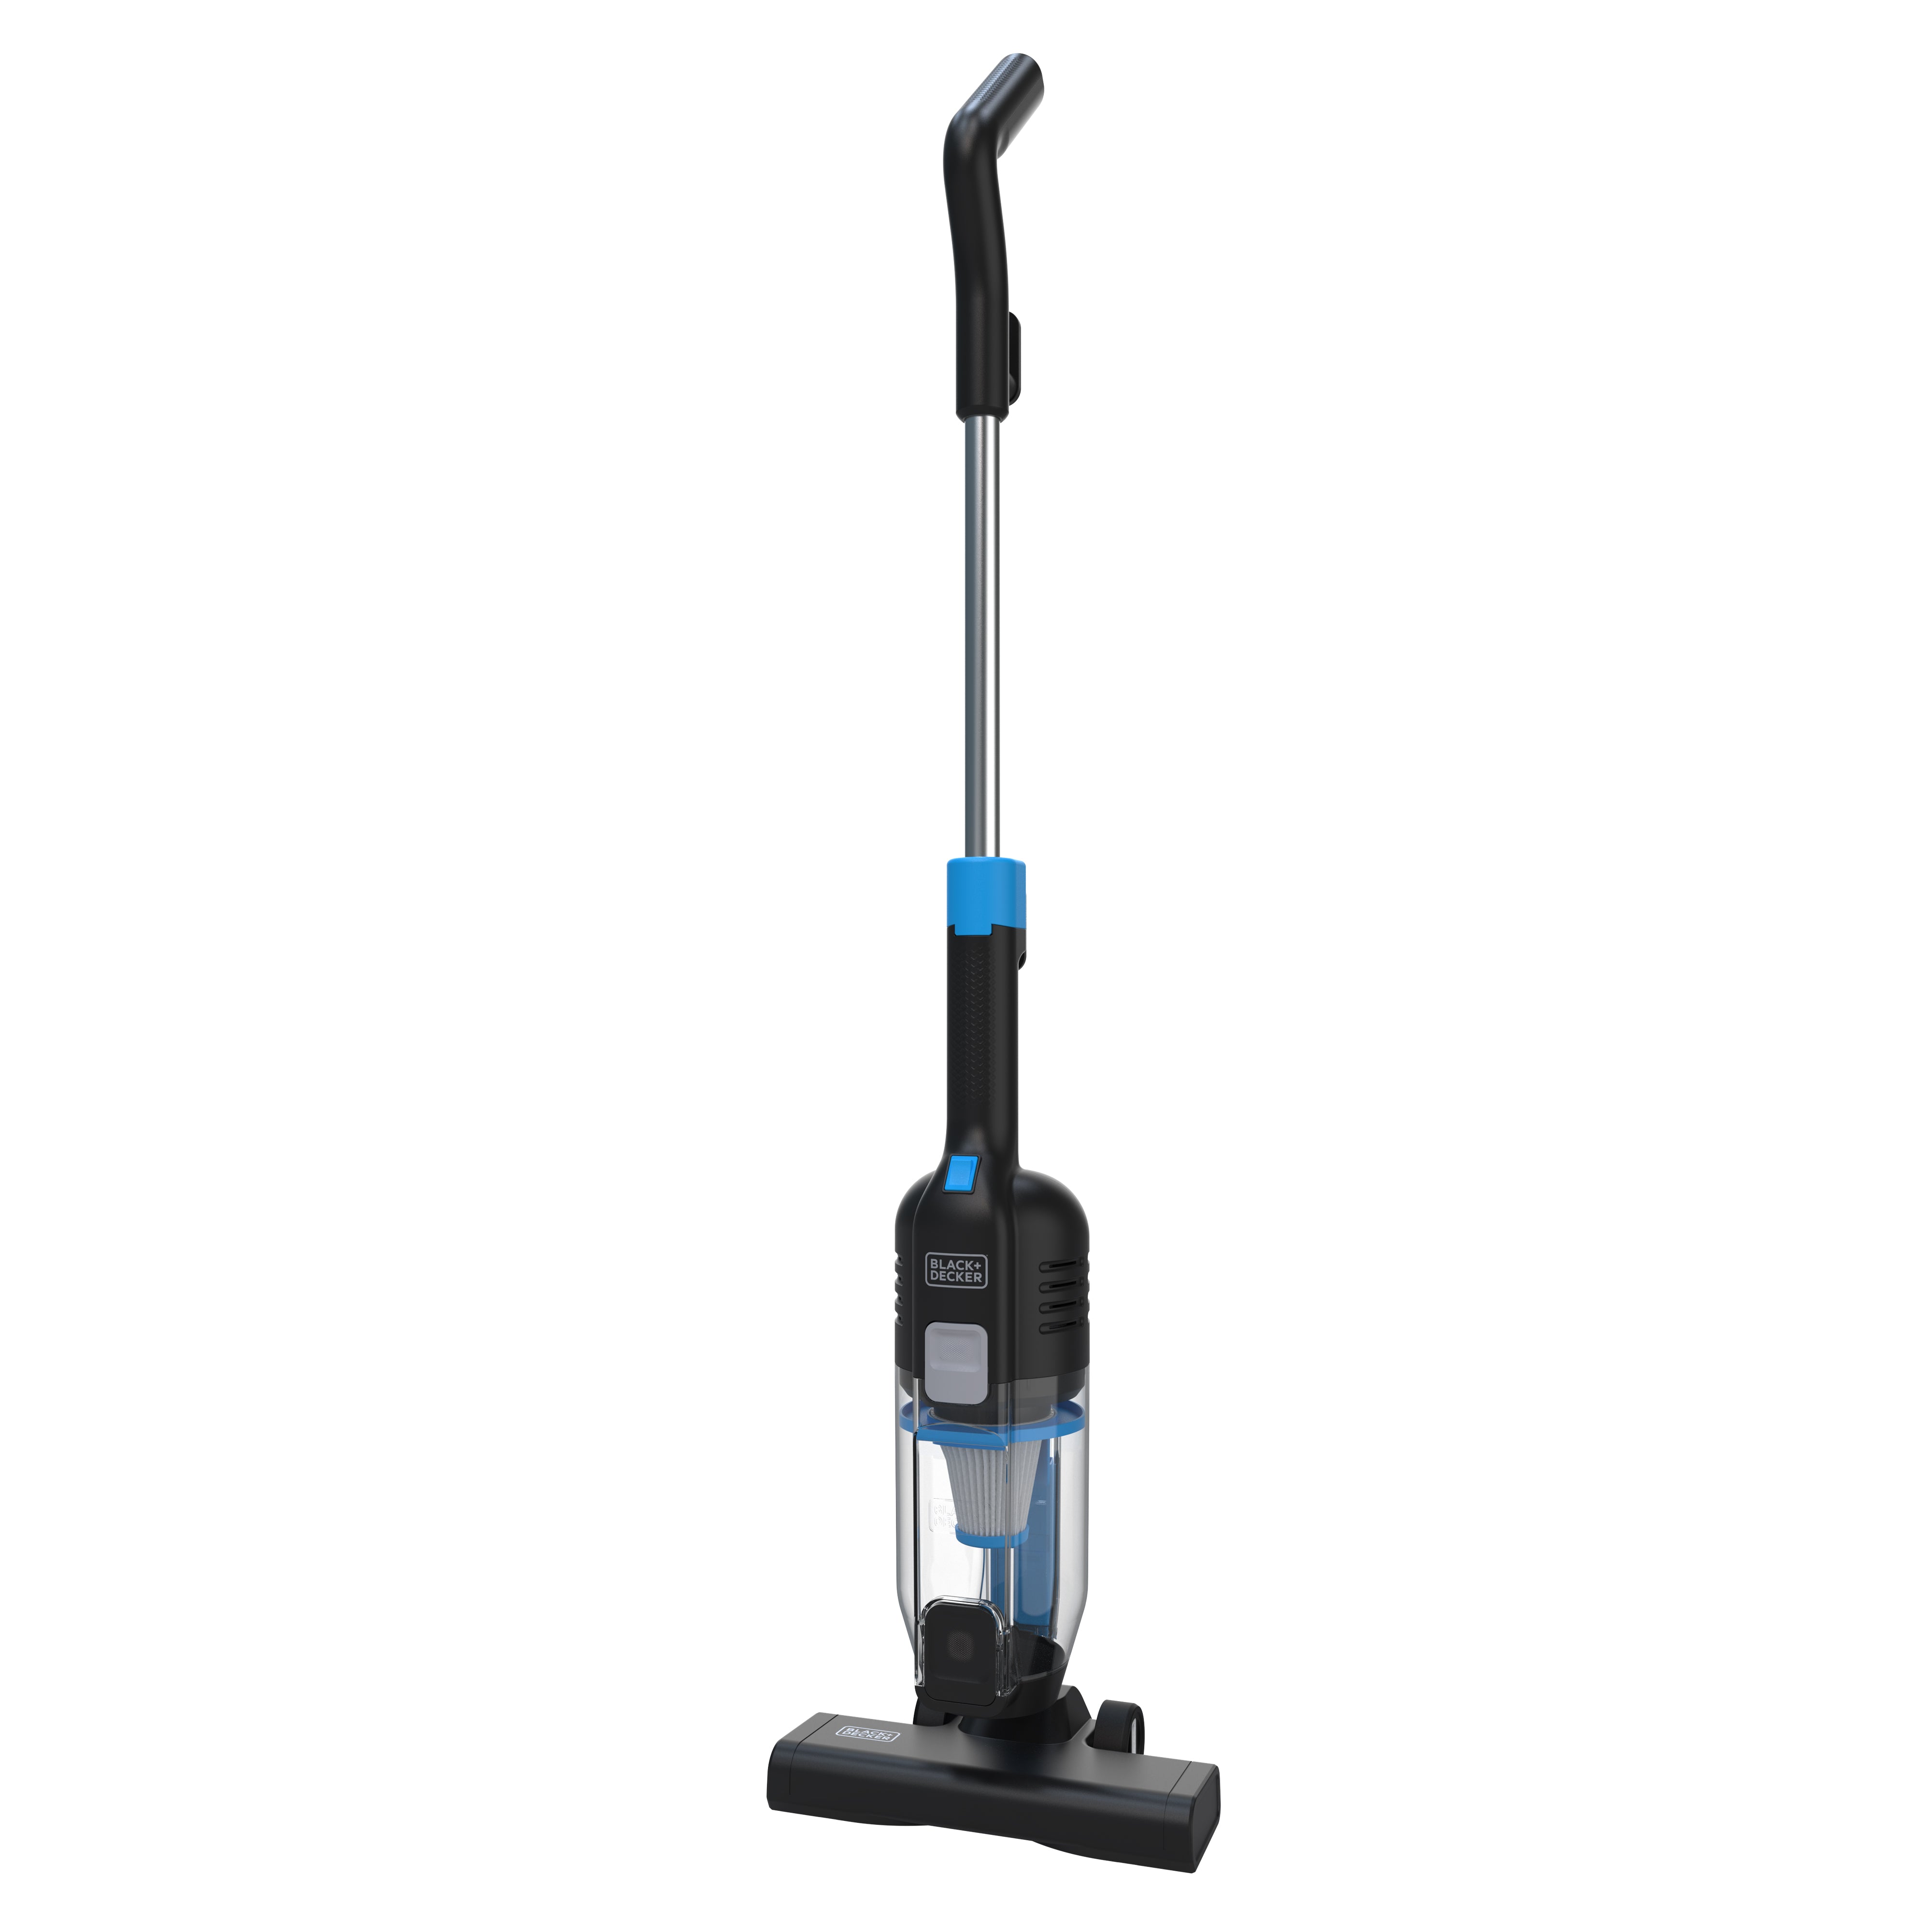 This Popular Black + Decker Handheld Vacuum Is Powerful and